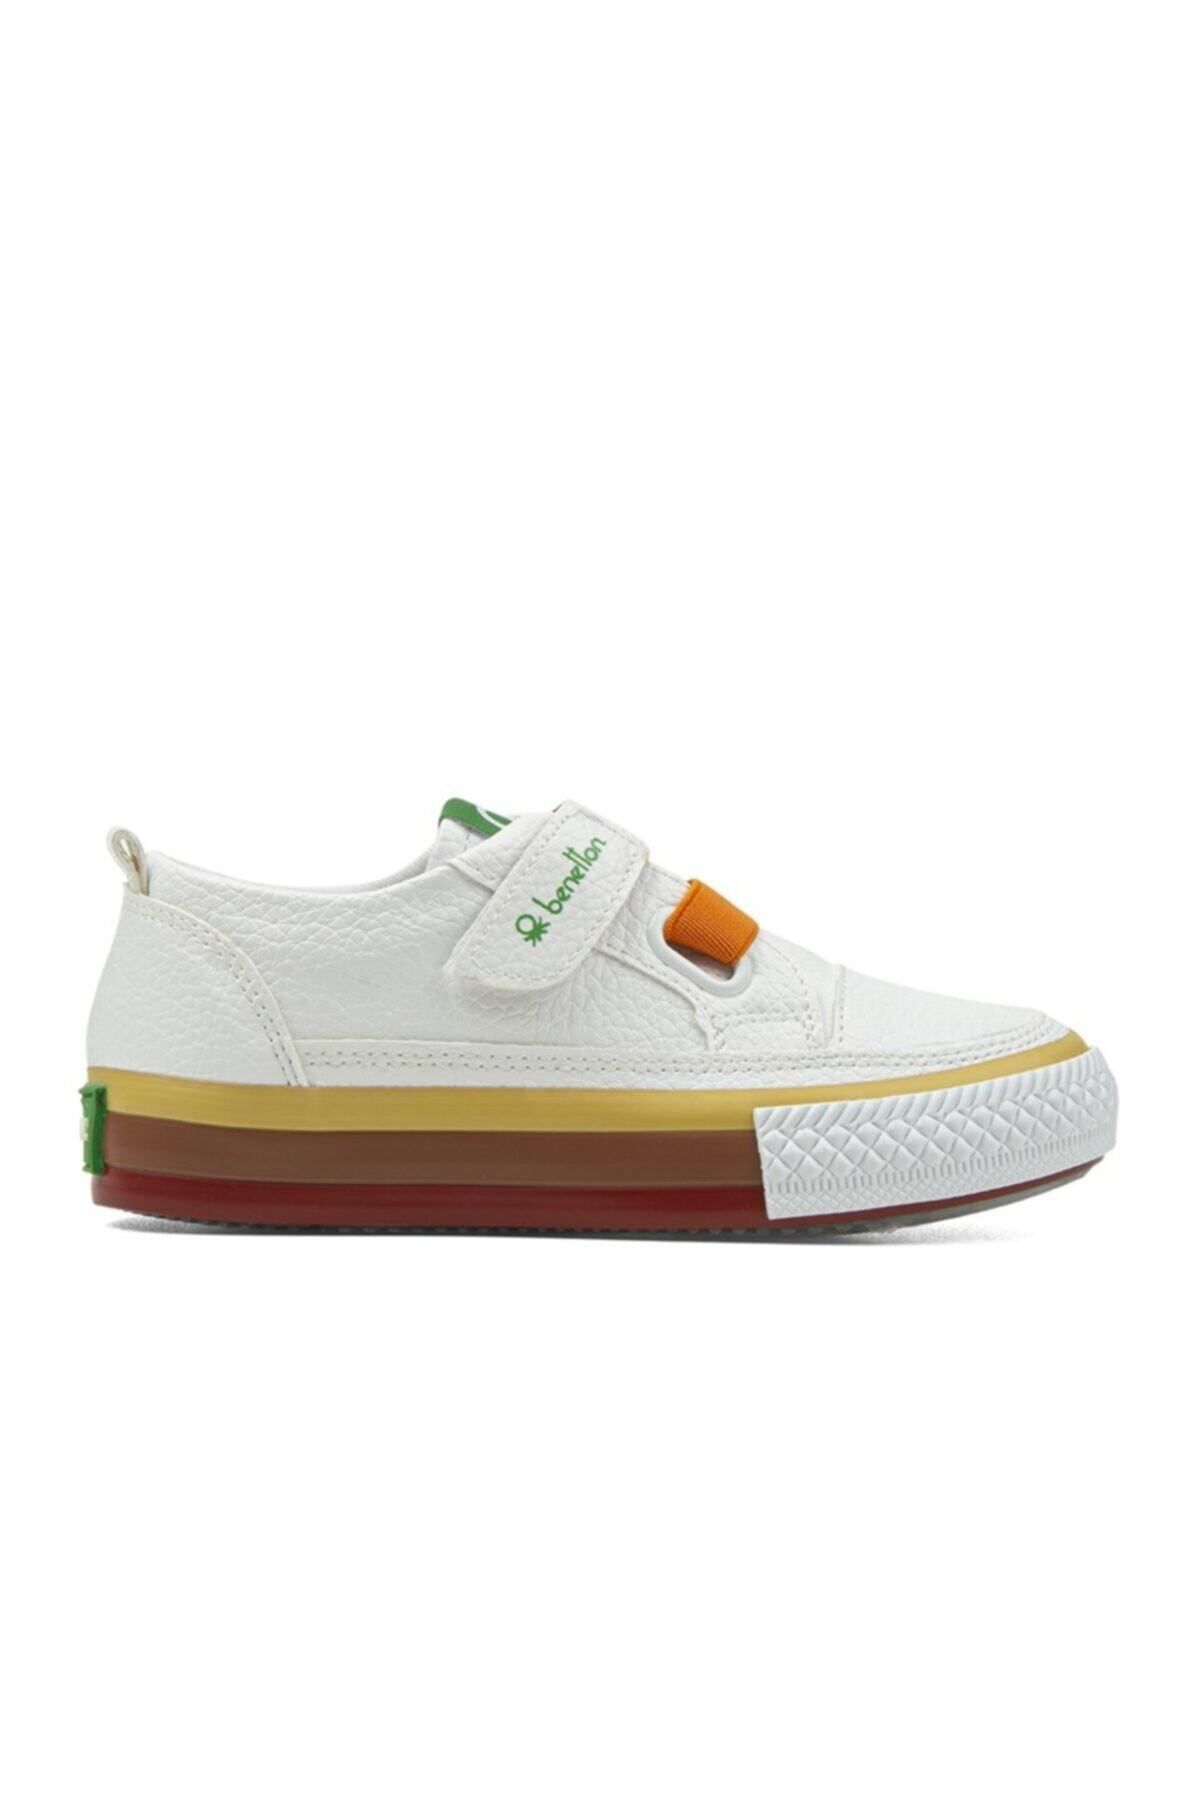 Benetton ® | BN-30445 - 3394 سفید کفش ورزشی بچه گانه